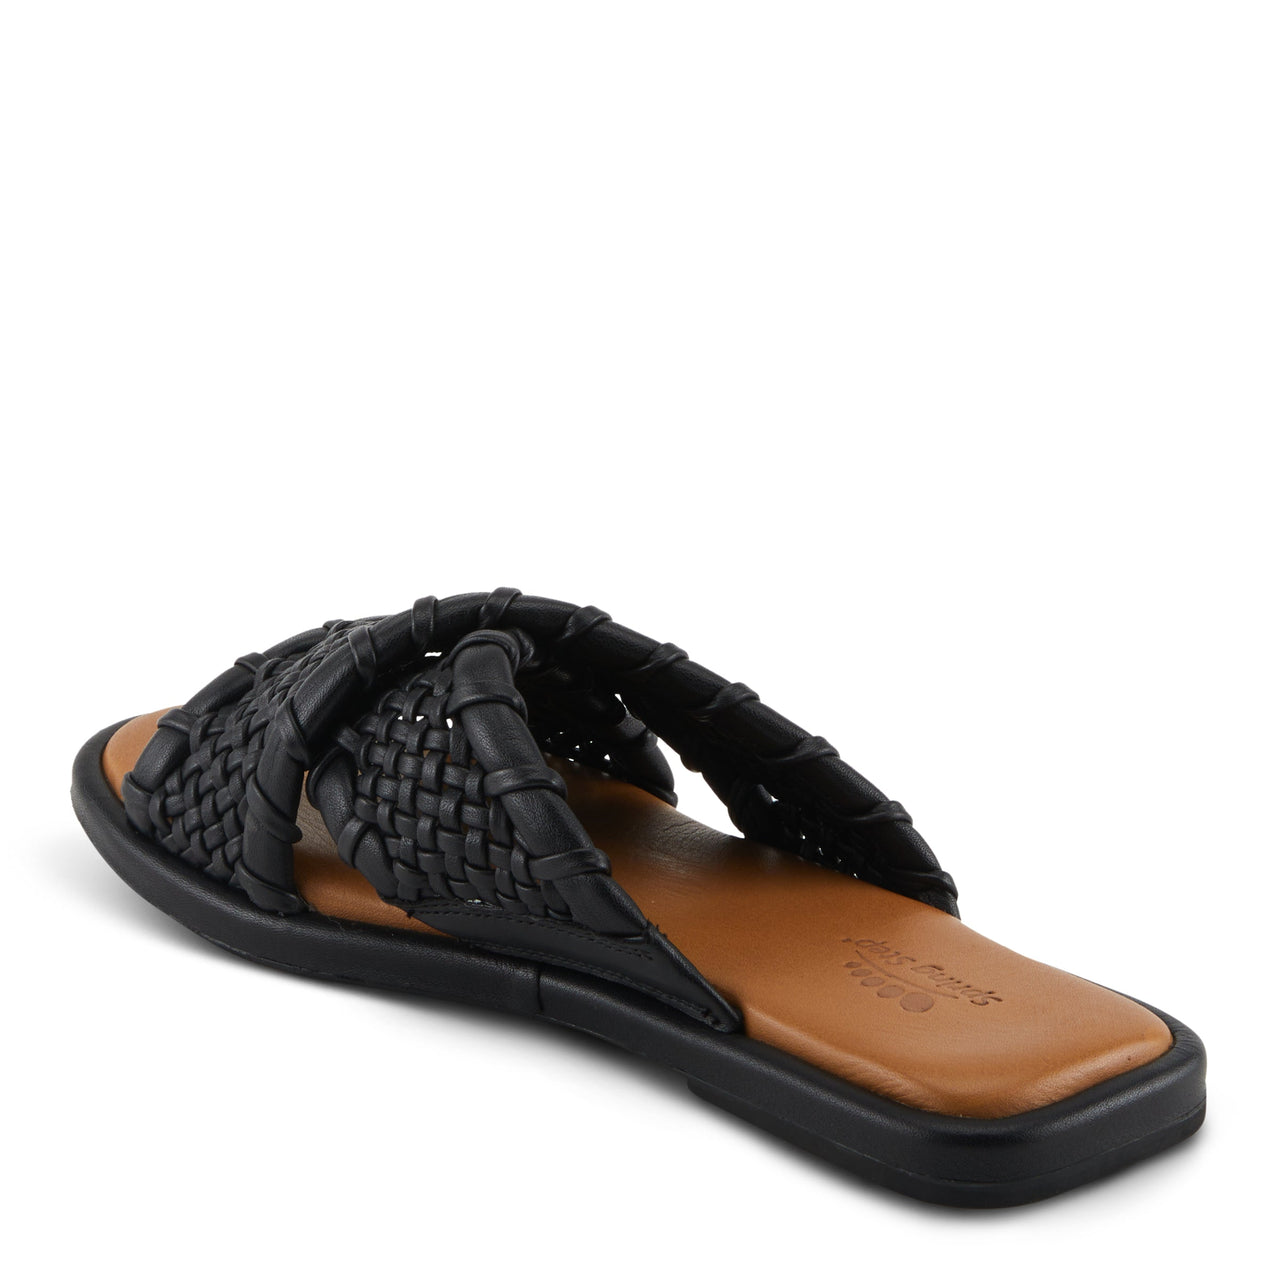 Beautiful and comfortable Spring Step Montauk Sandals in versatile tan color